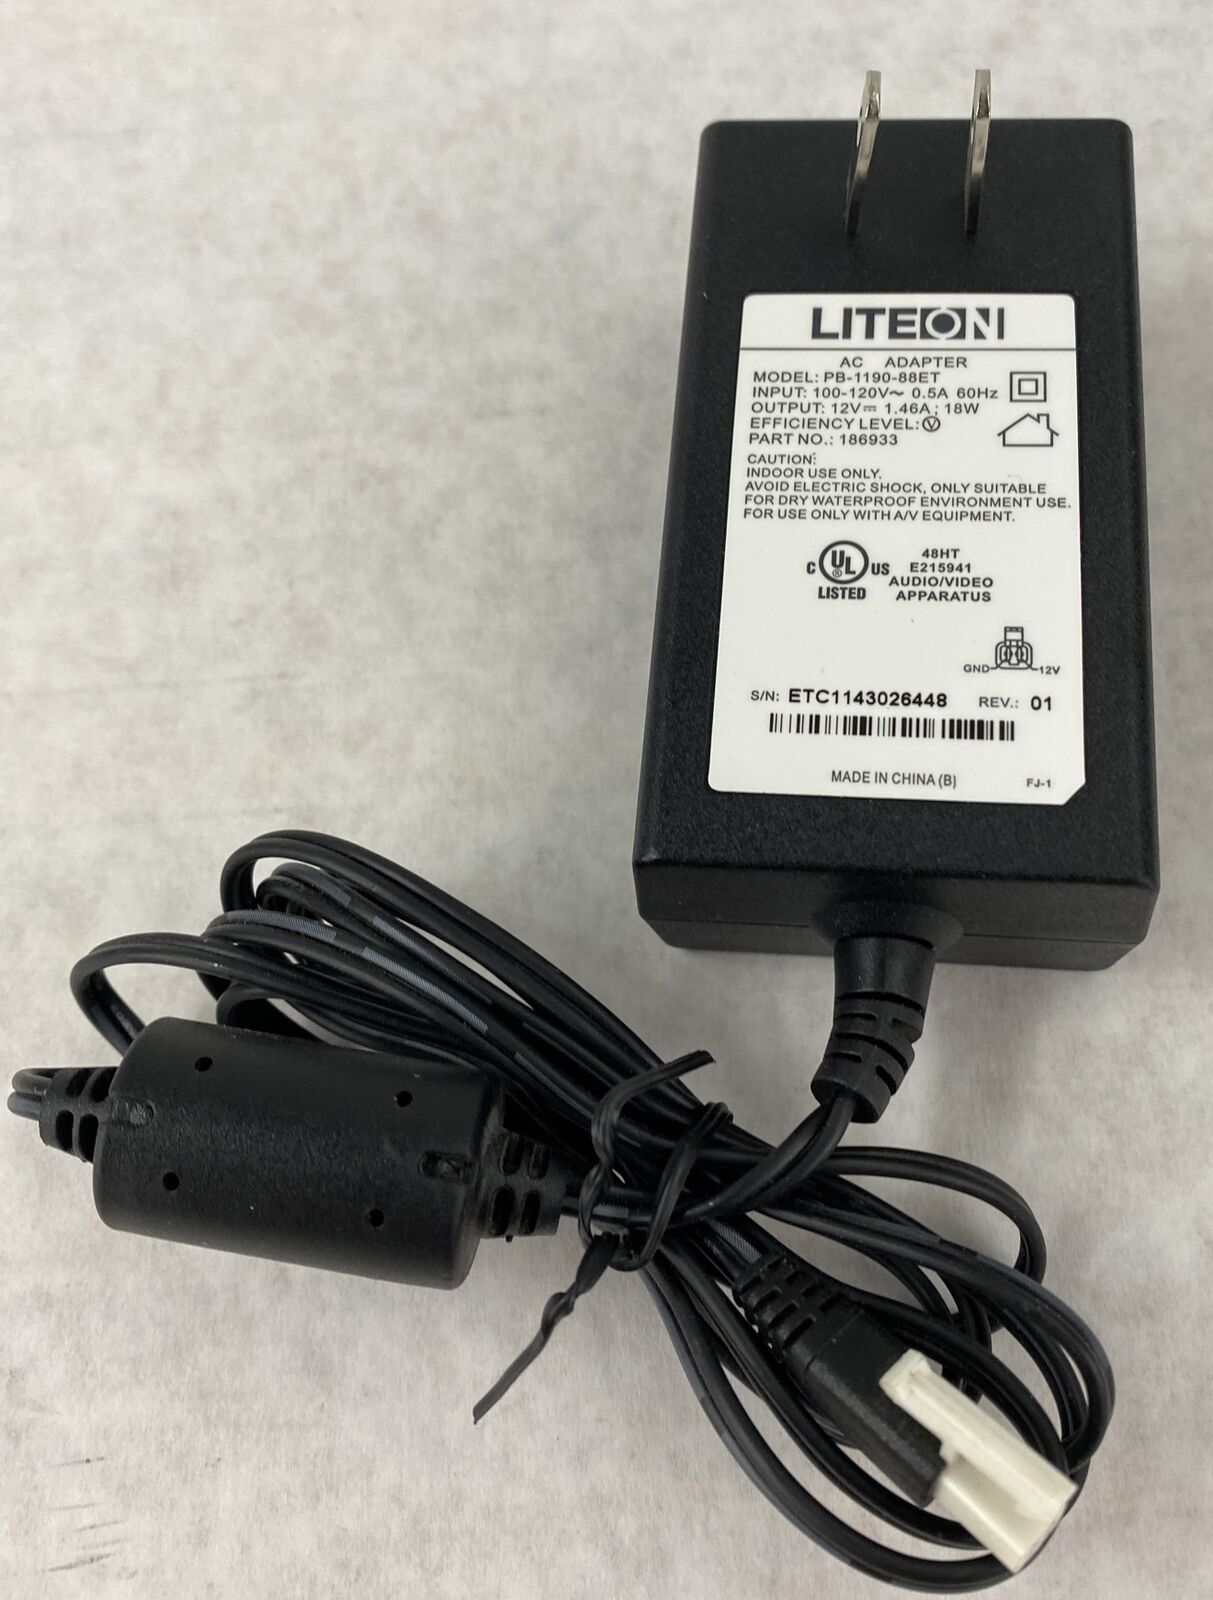 Liteon PB-1190-88ET 186933 100-120V 0.5A 60Hz 12V 1.5A AC Power Adapter